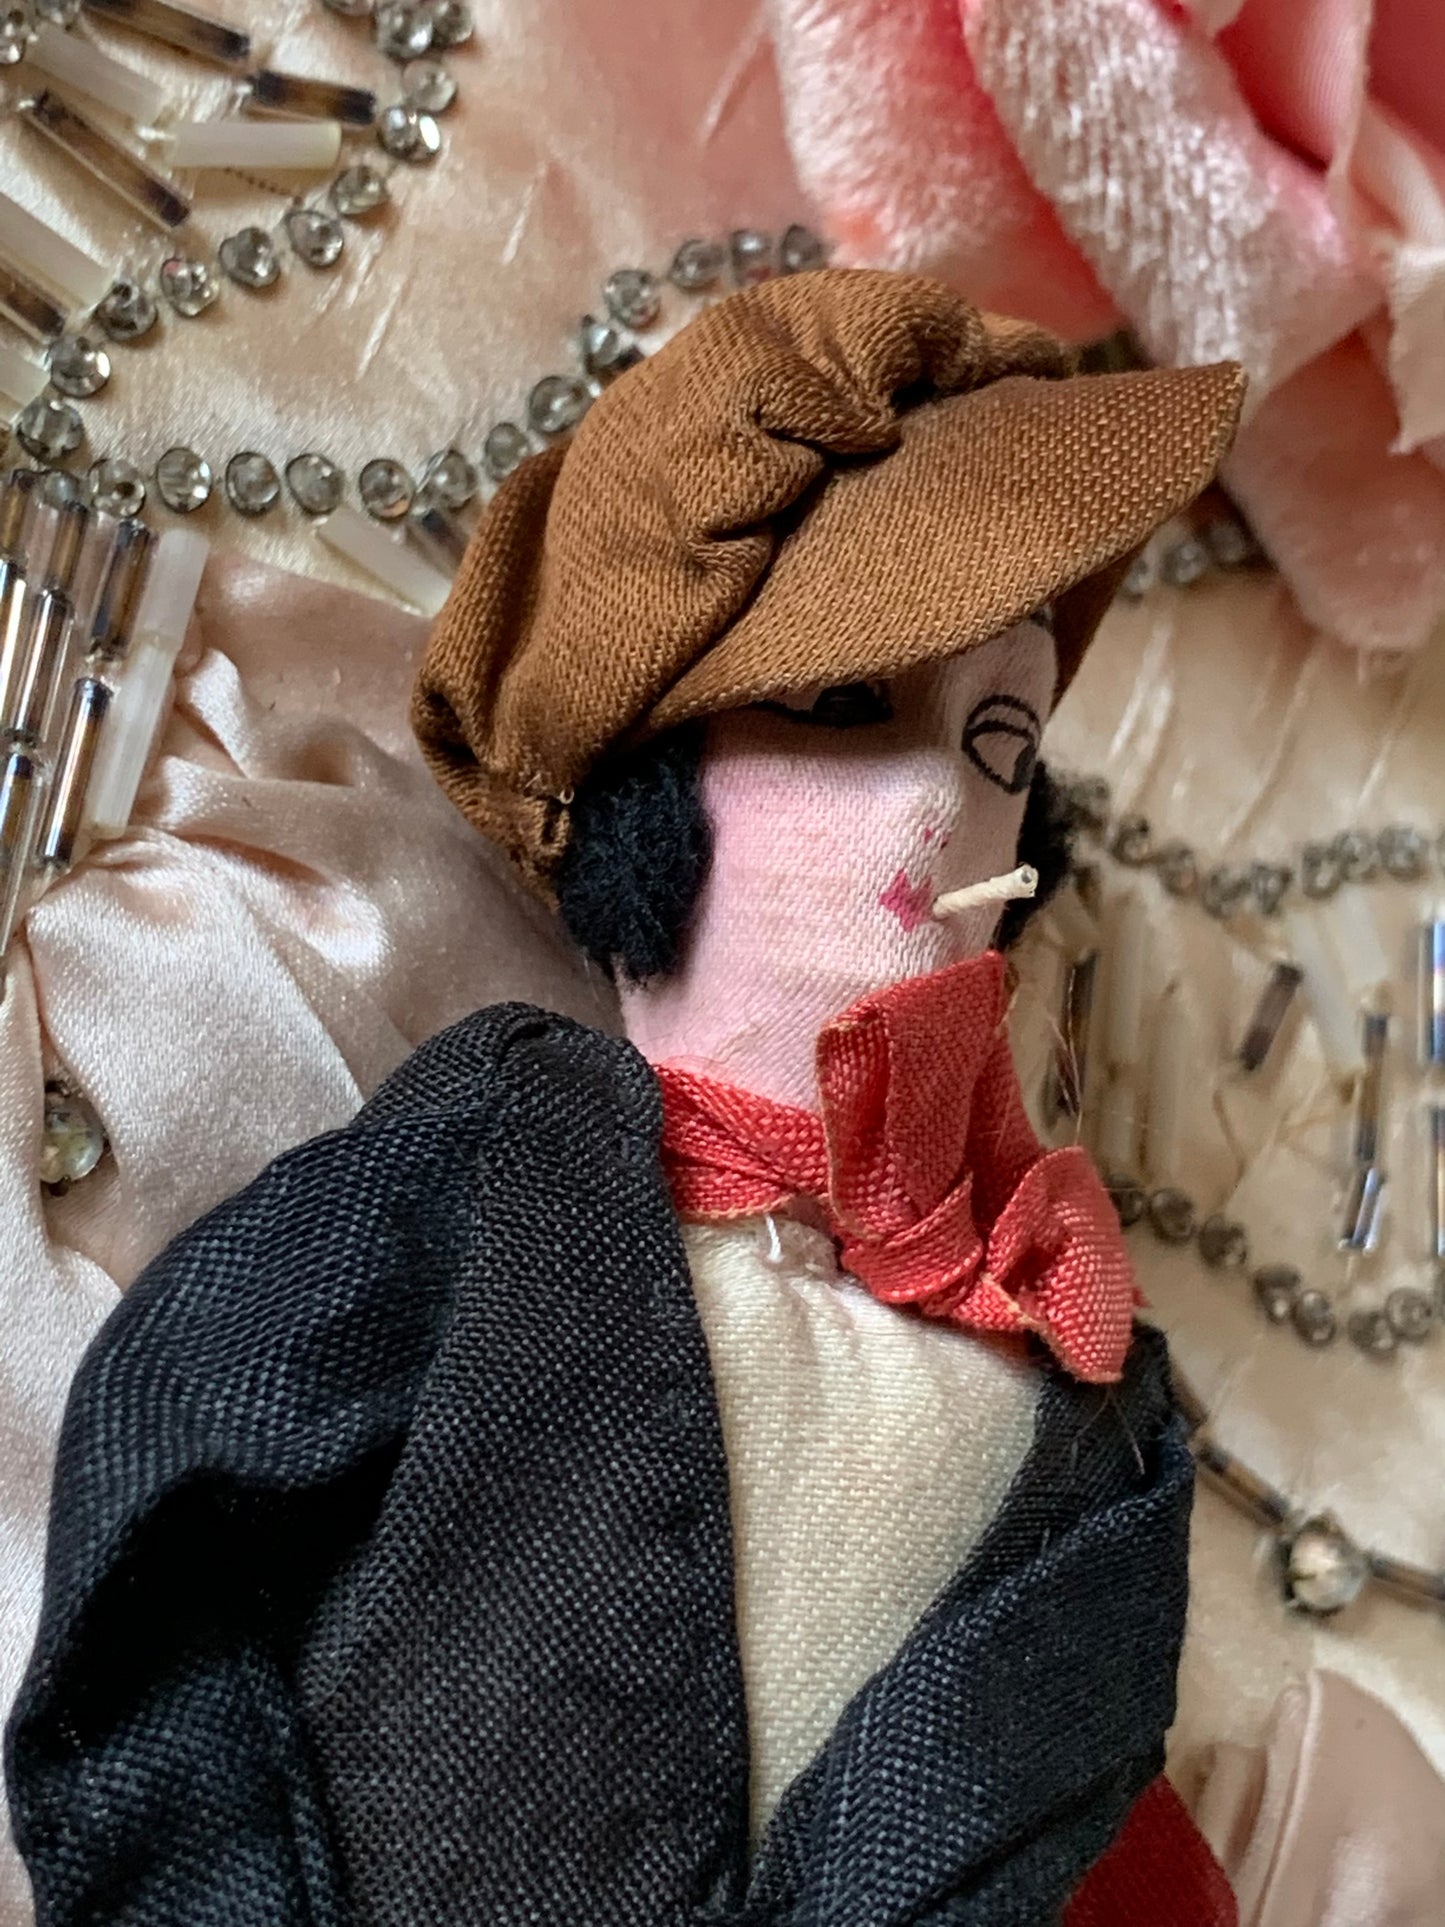 Vintage miniature smoker doll